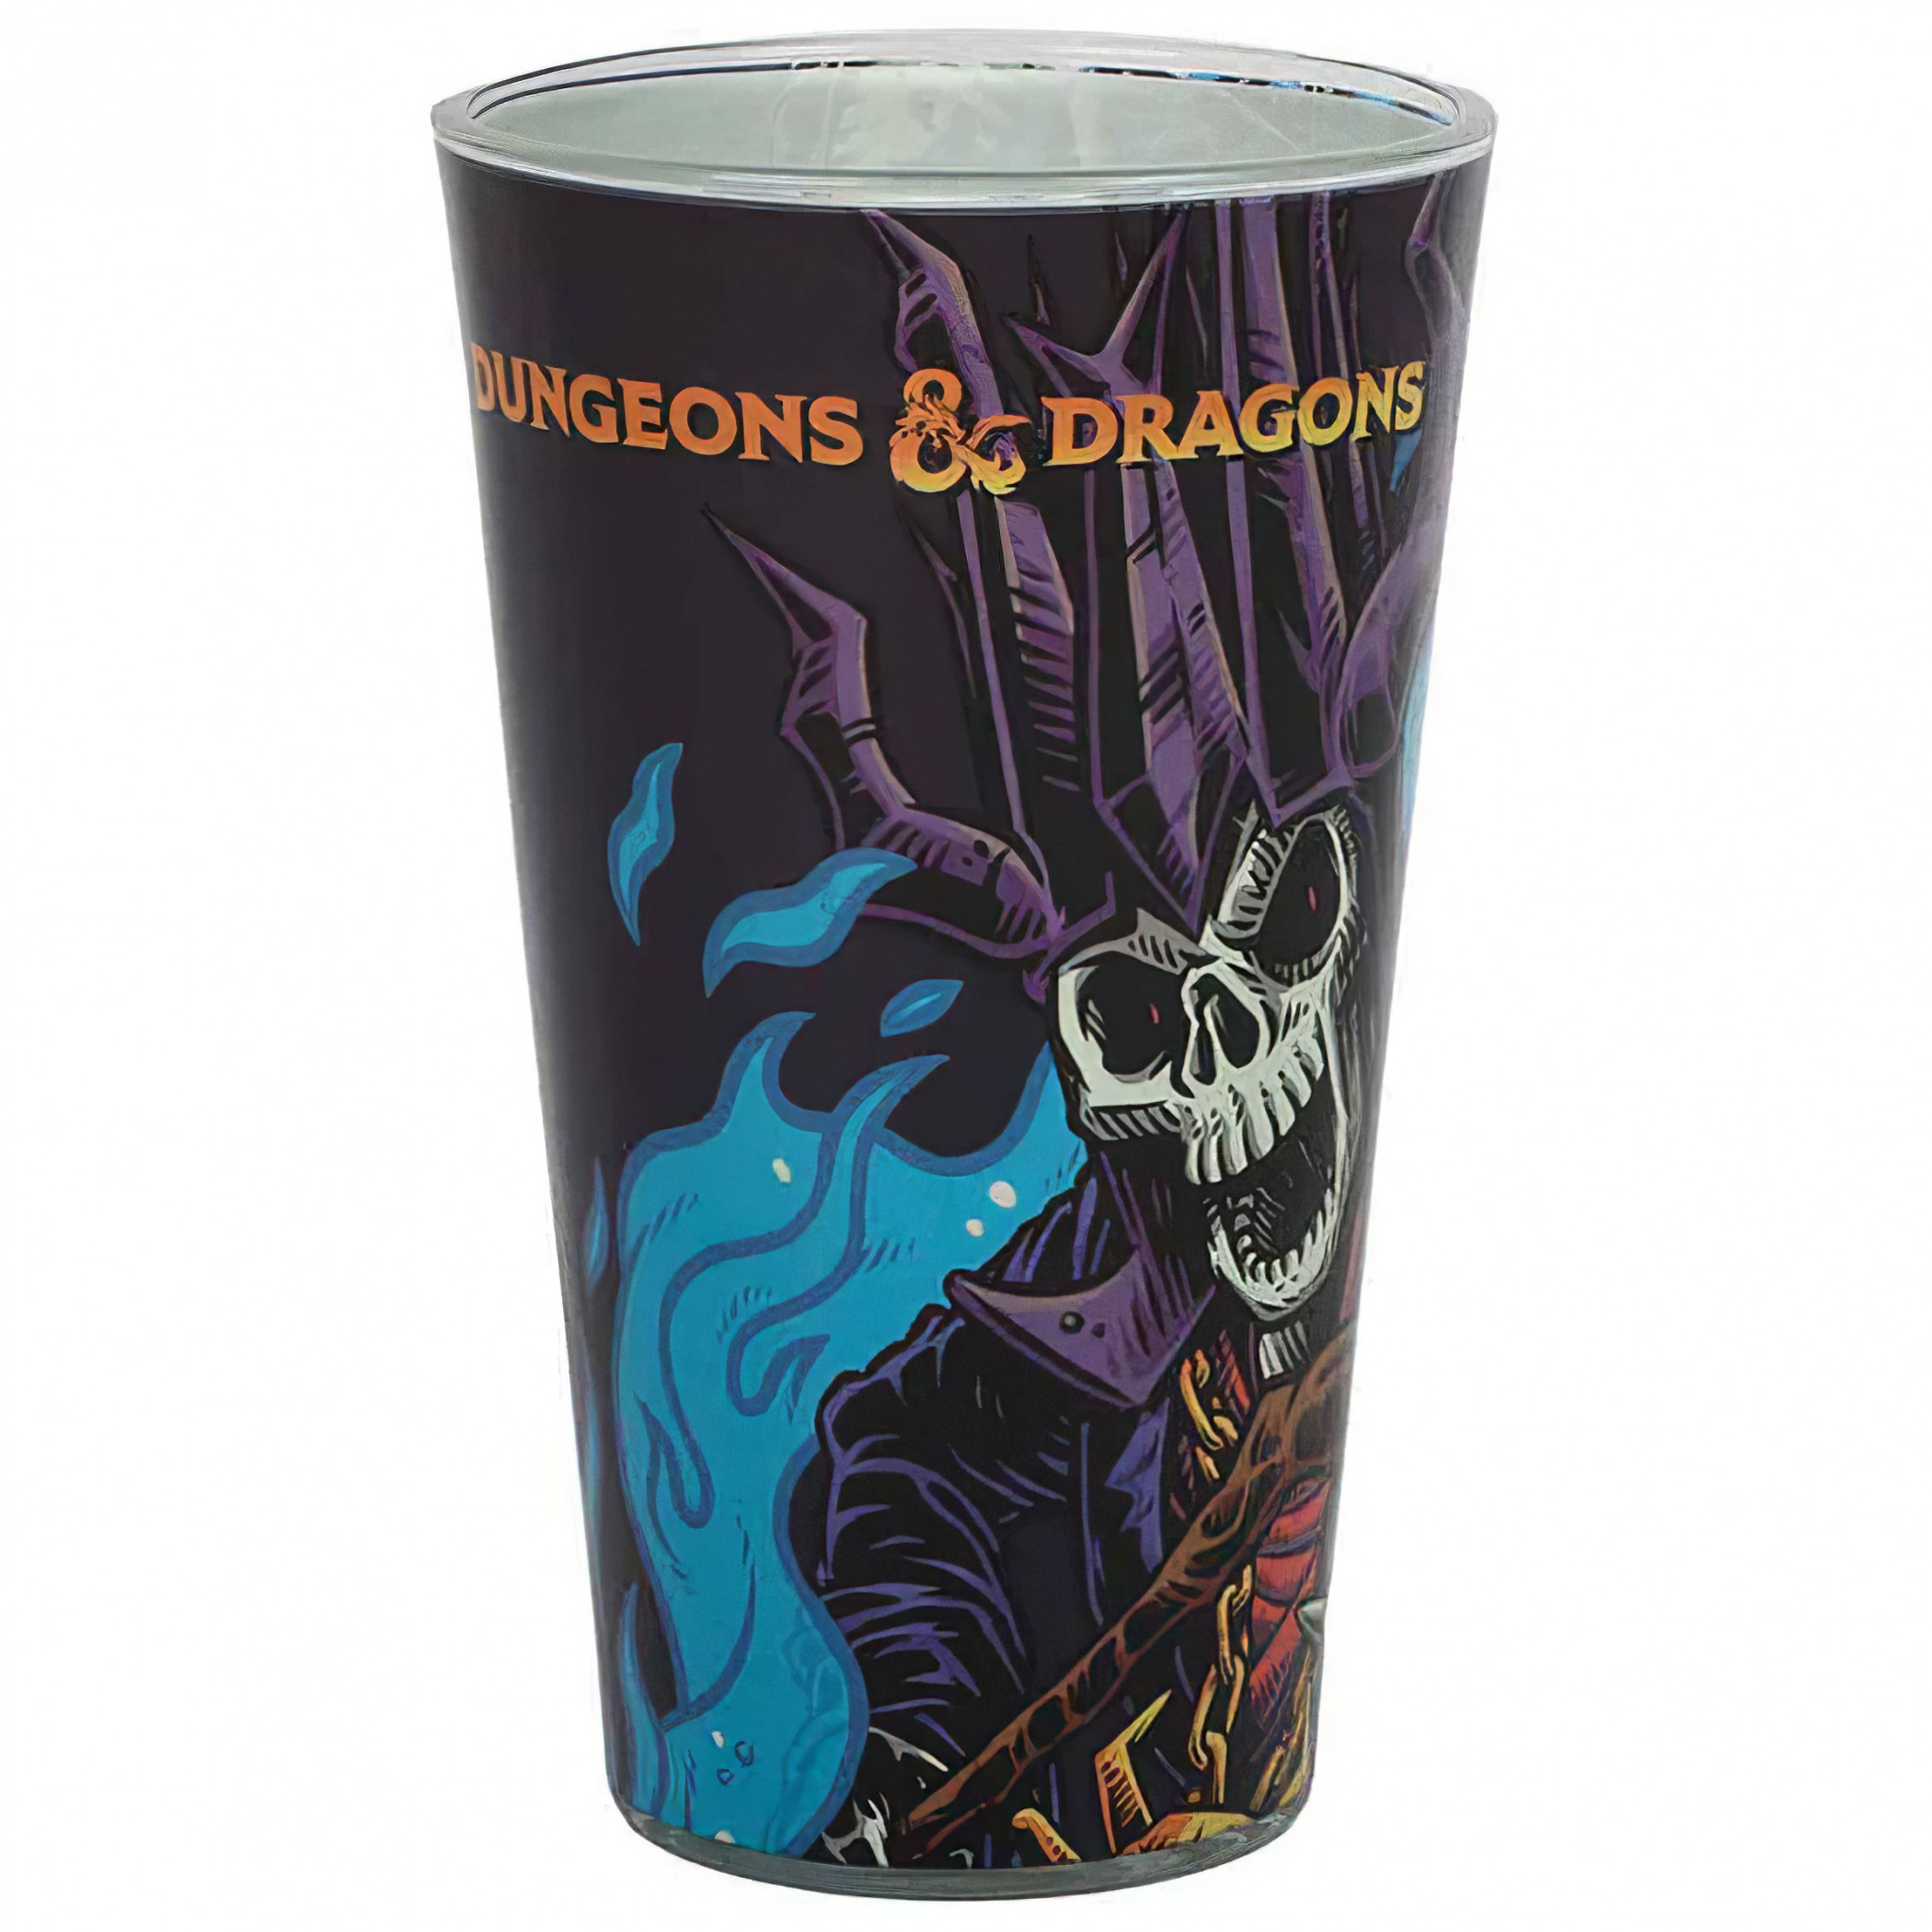 Dungeons & Dragons Acererak 16 oz. Pint Glass